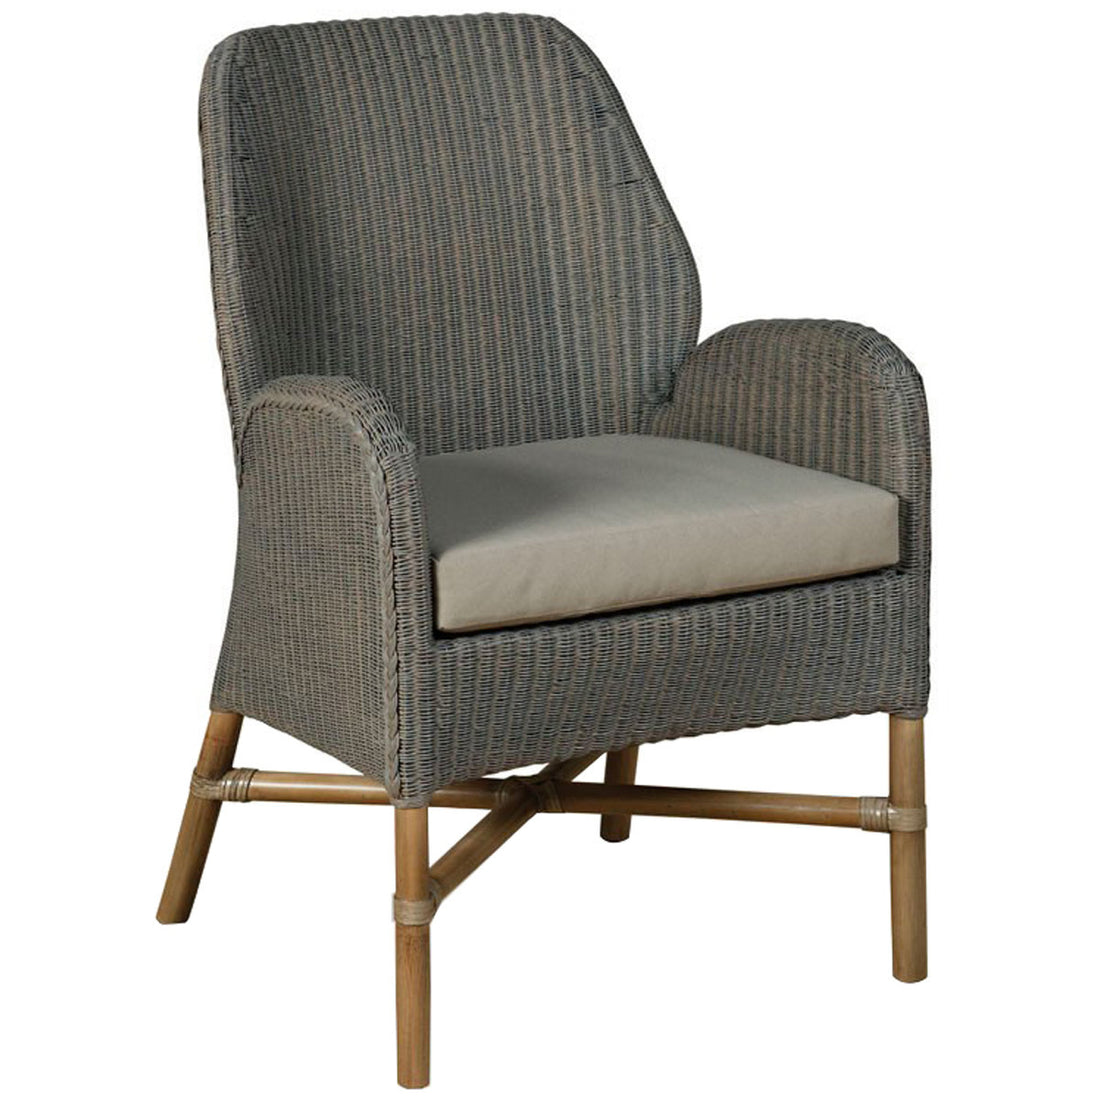 Woodbridge Furniture Woven Arm Chair